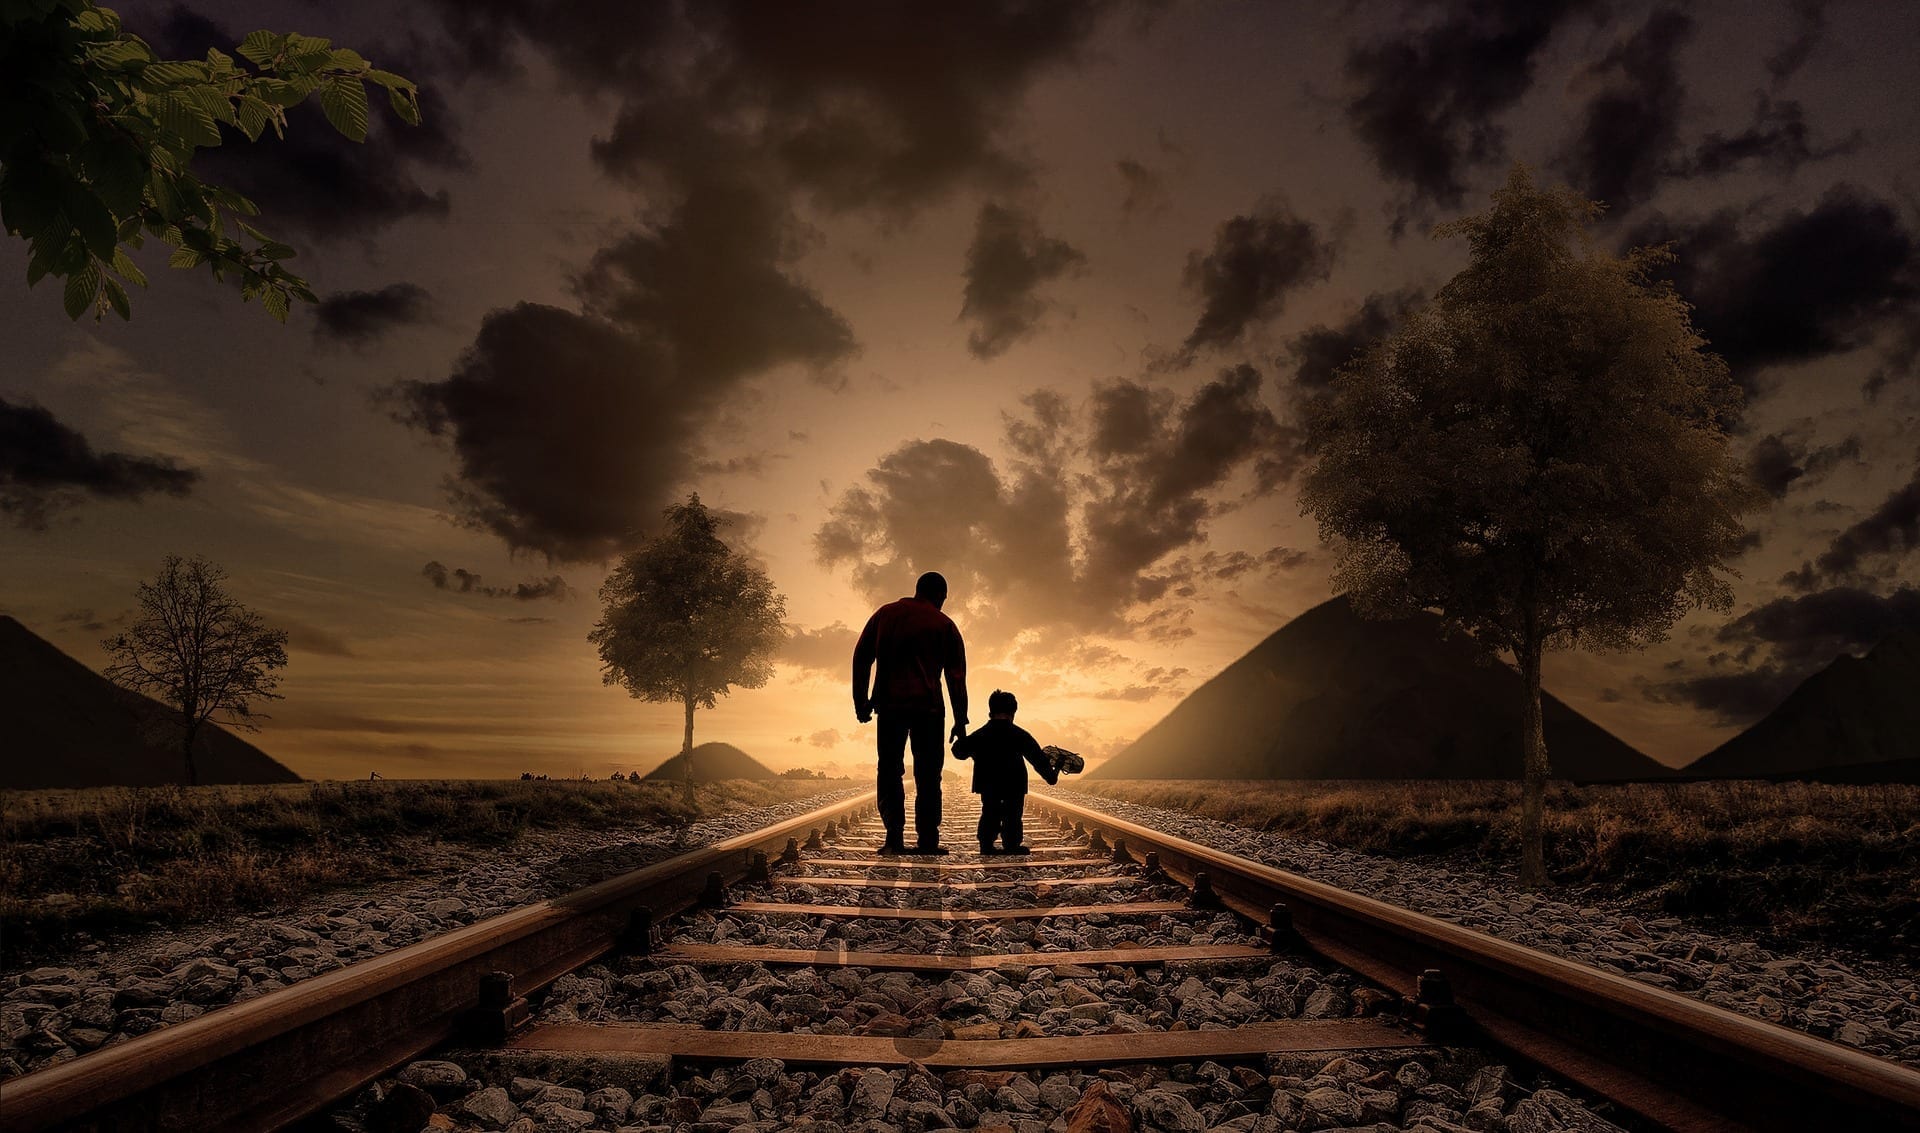 man and child walk on train tracks at sunset